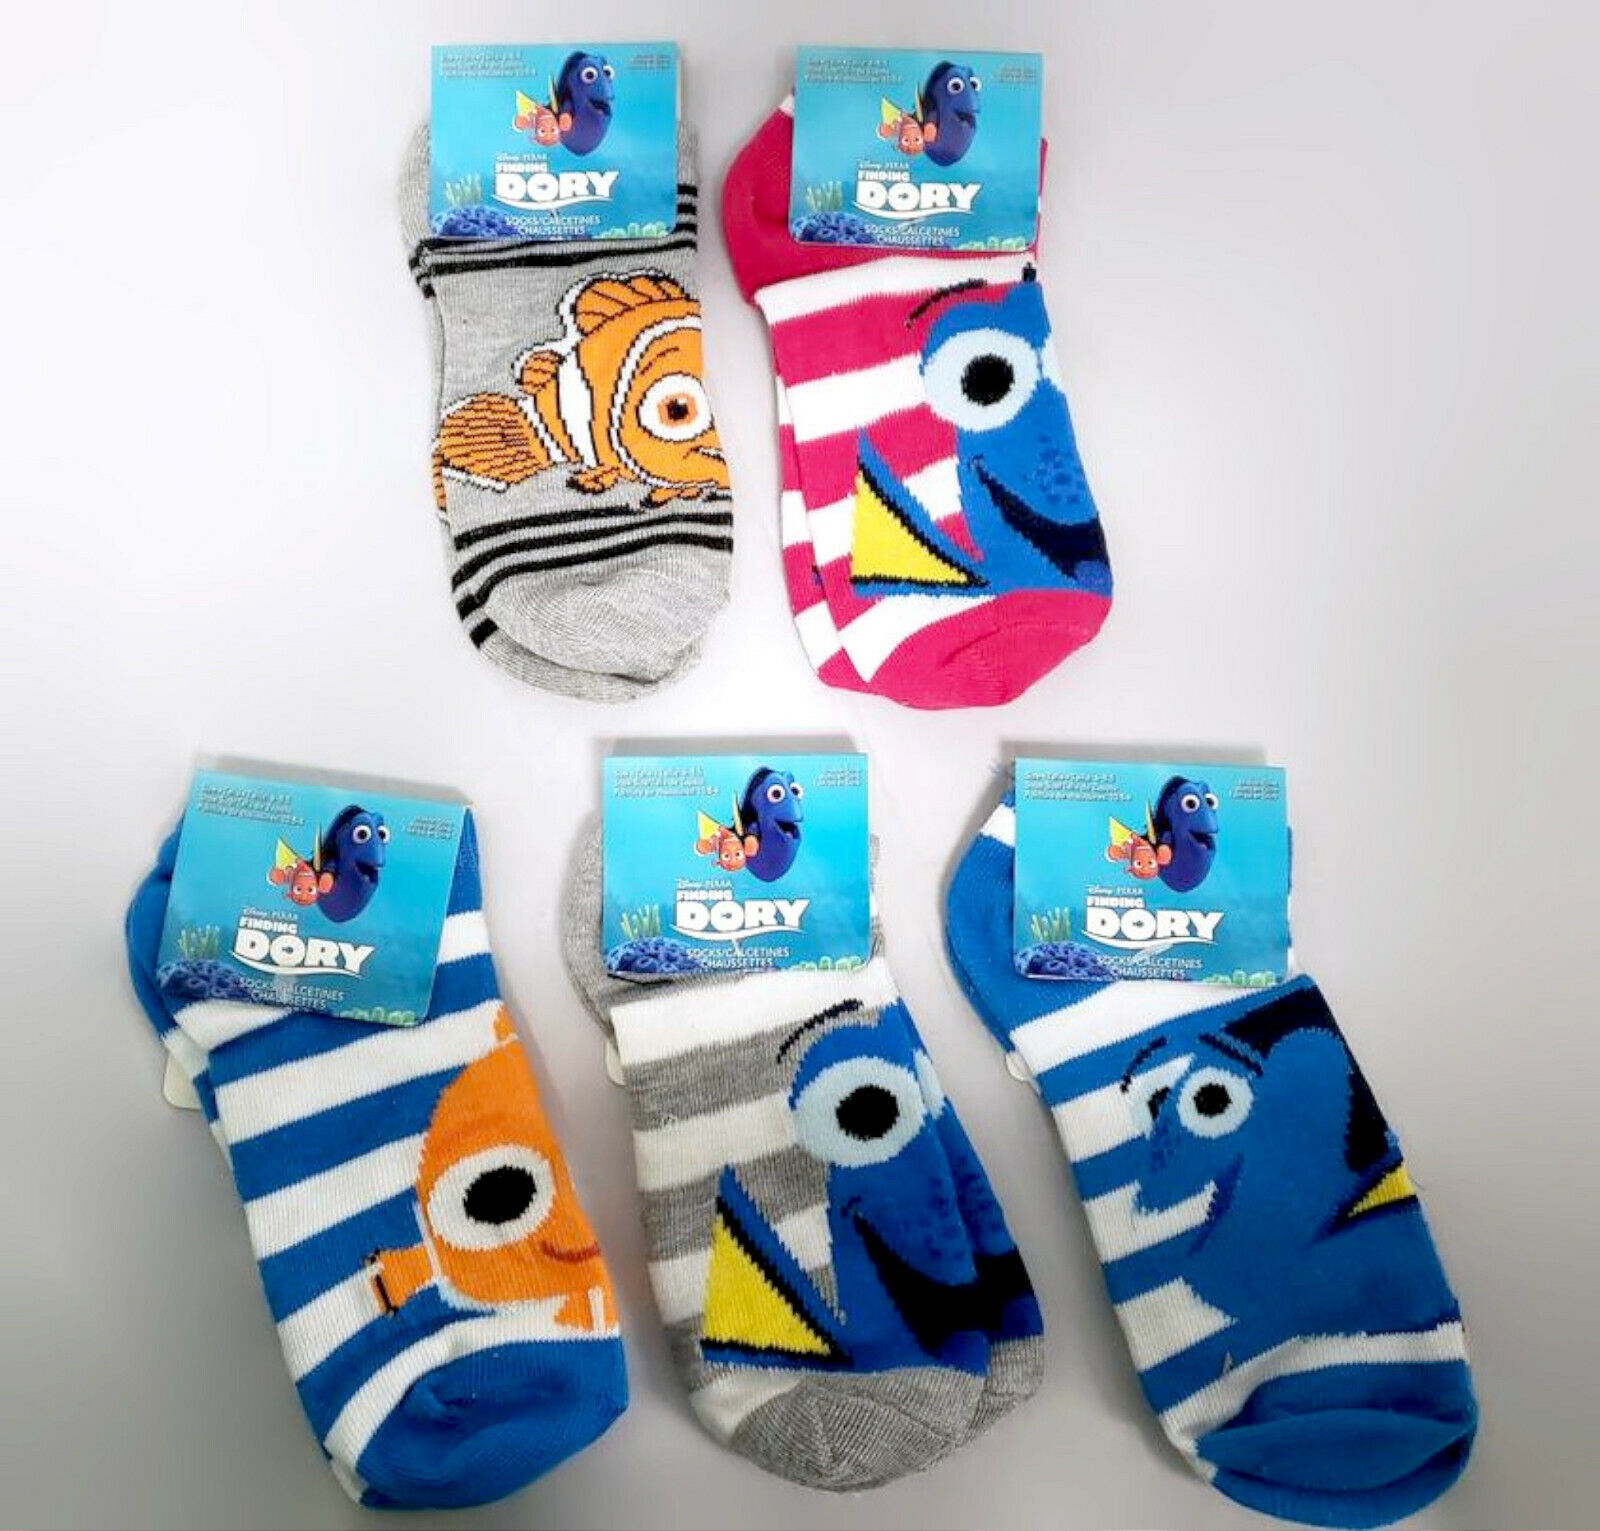 NEW Disney Pixar Finding Dory Unisex Kids' Socks Set (5 Pairs) Sock Size: 4-6 - $10.30